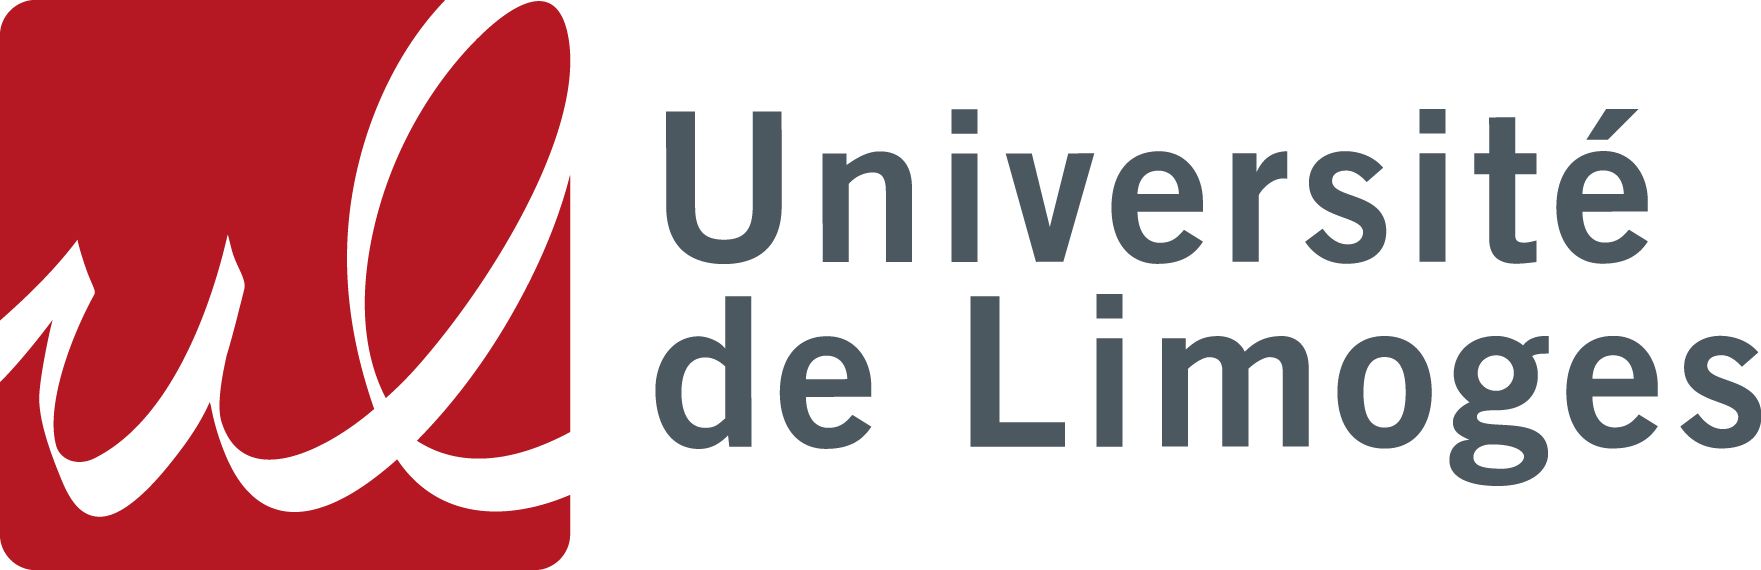 University of Limoges France